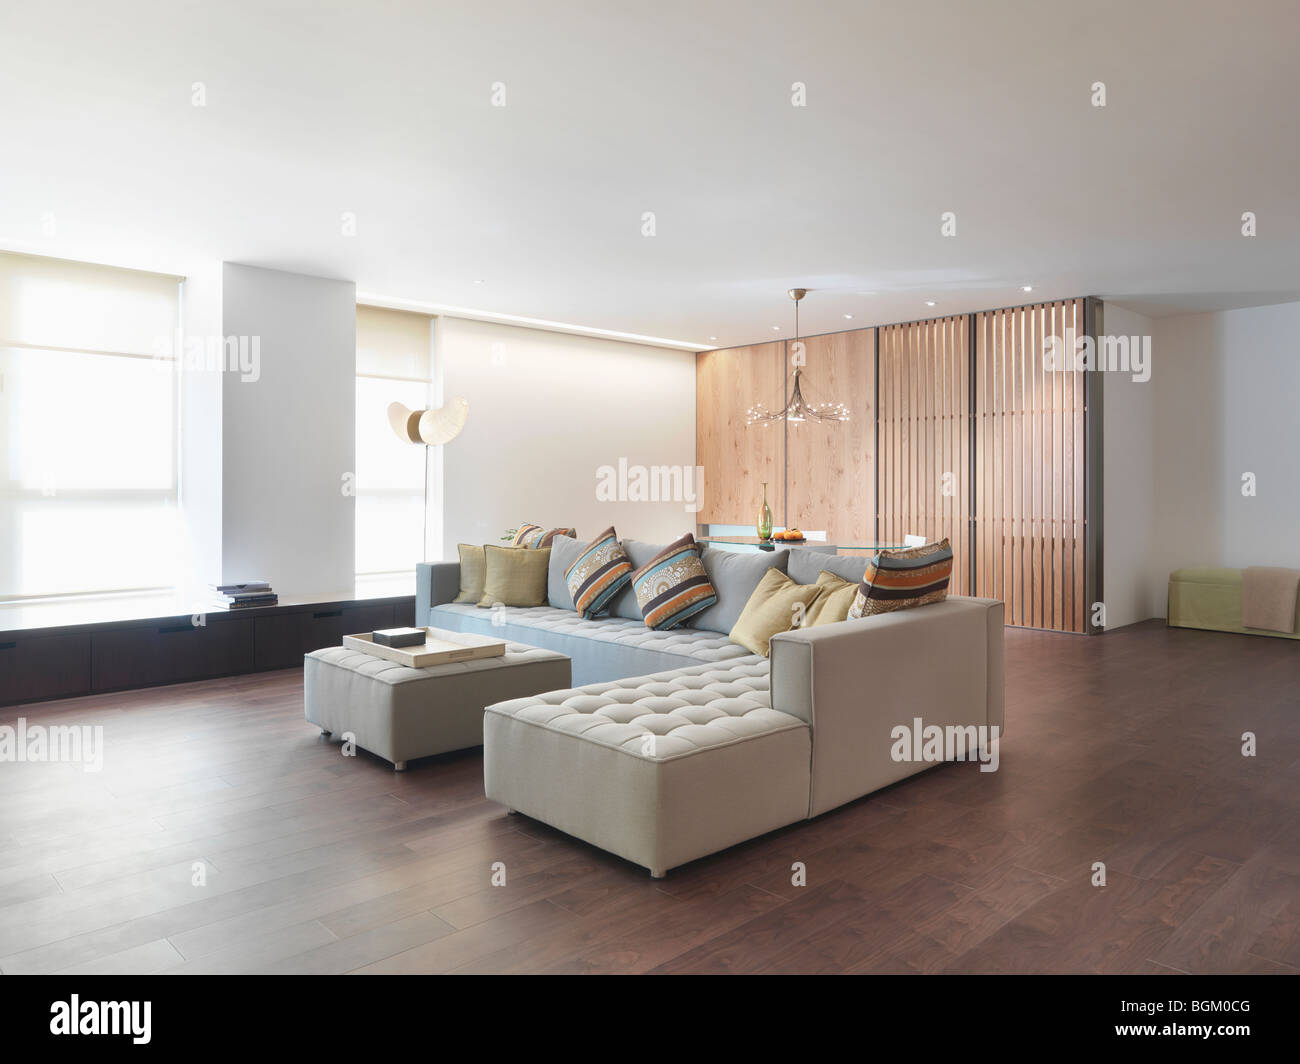 Minimalistic living room with hardwood floors Stock Photo